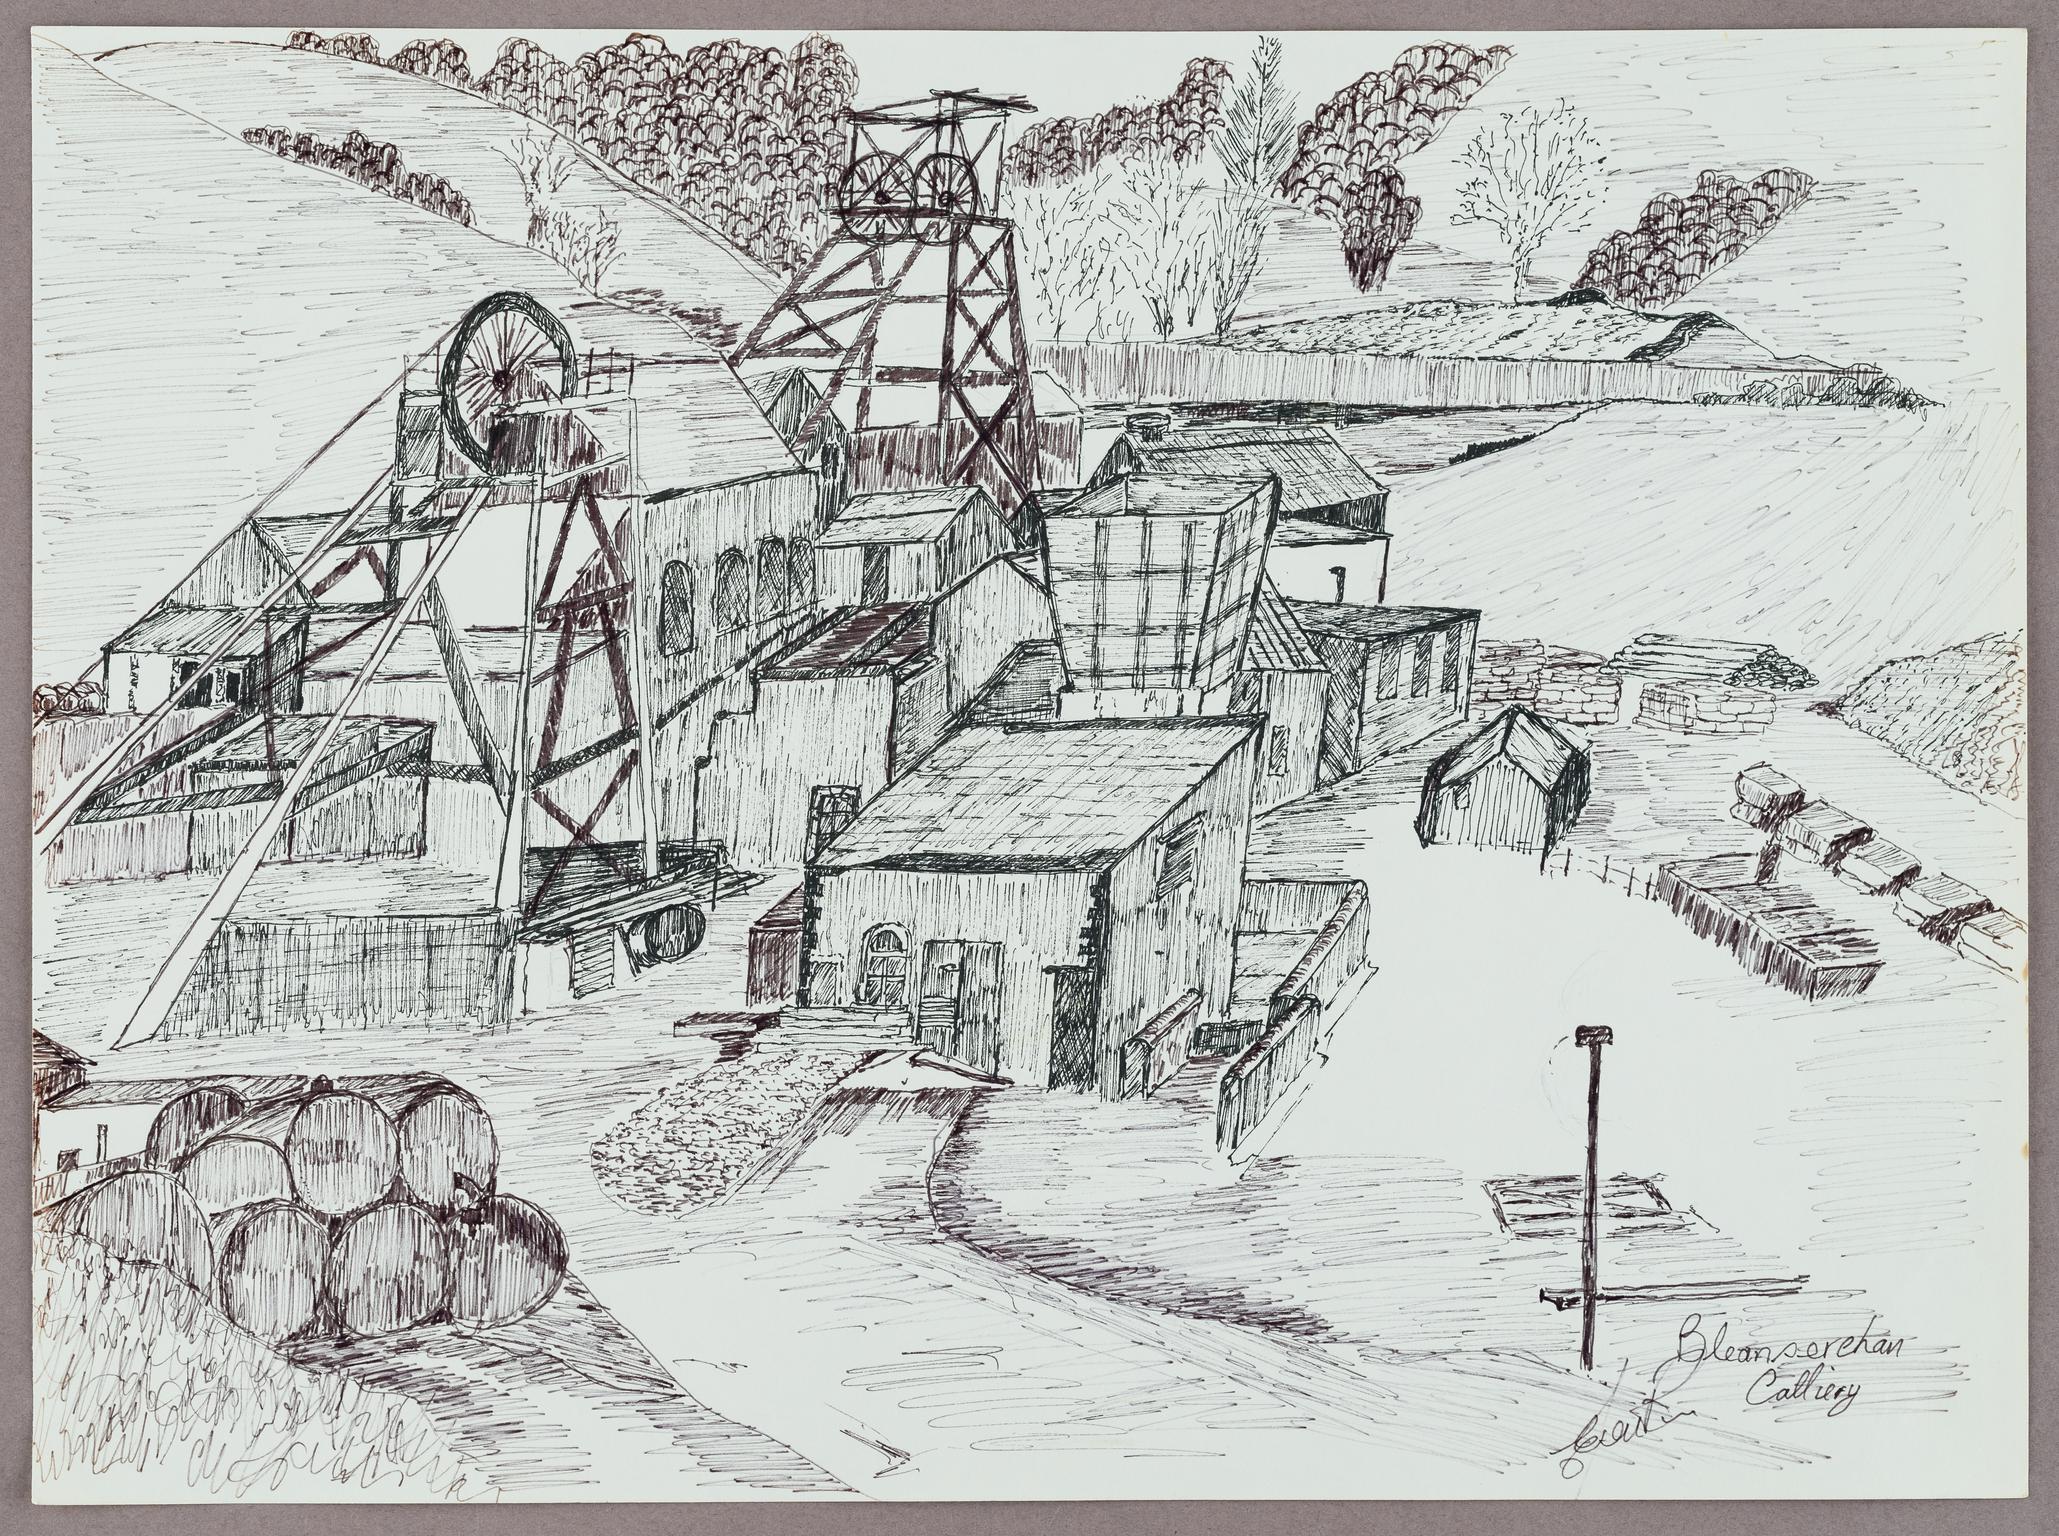 Blaenserchan Colliery (drawing)